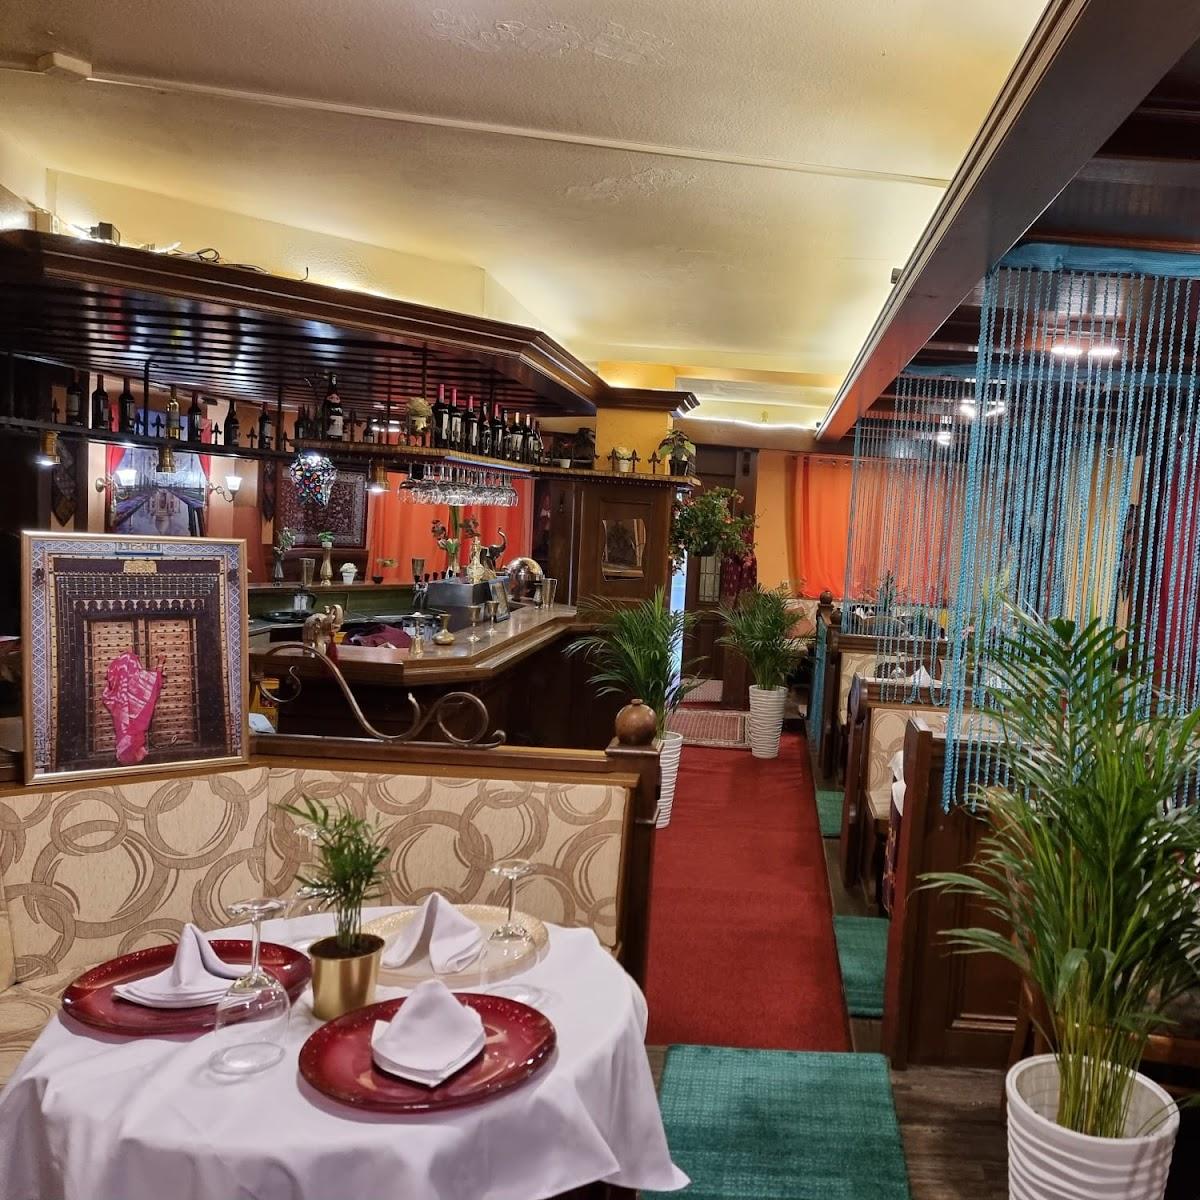 Restaurant "Tandoori Love" in Dortmund